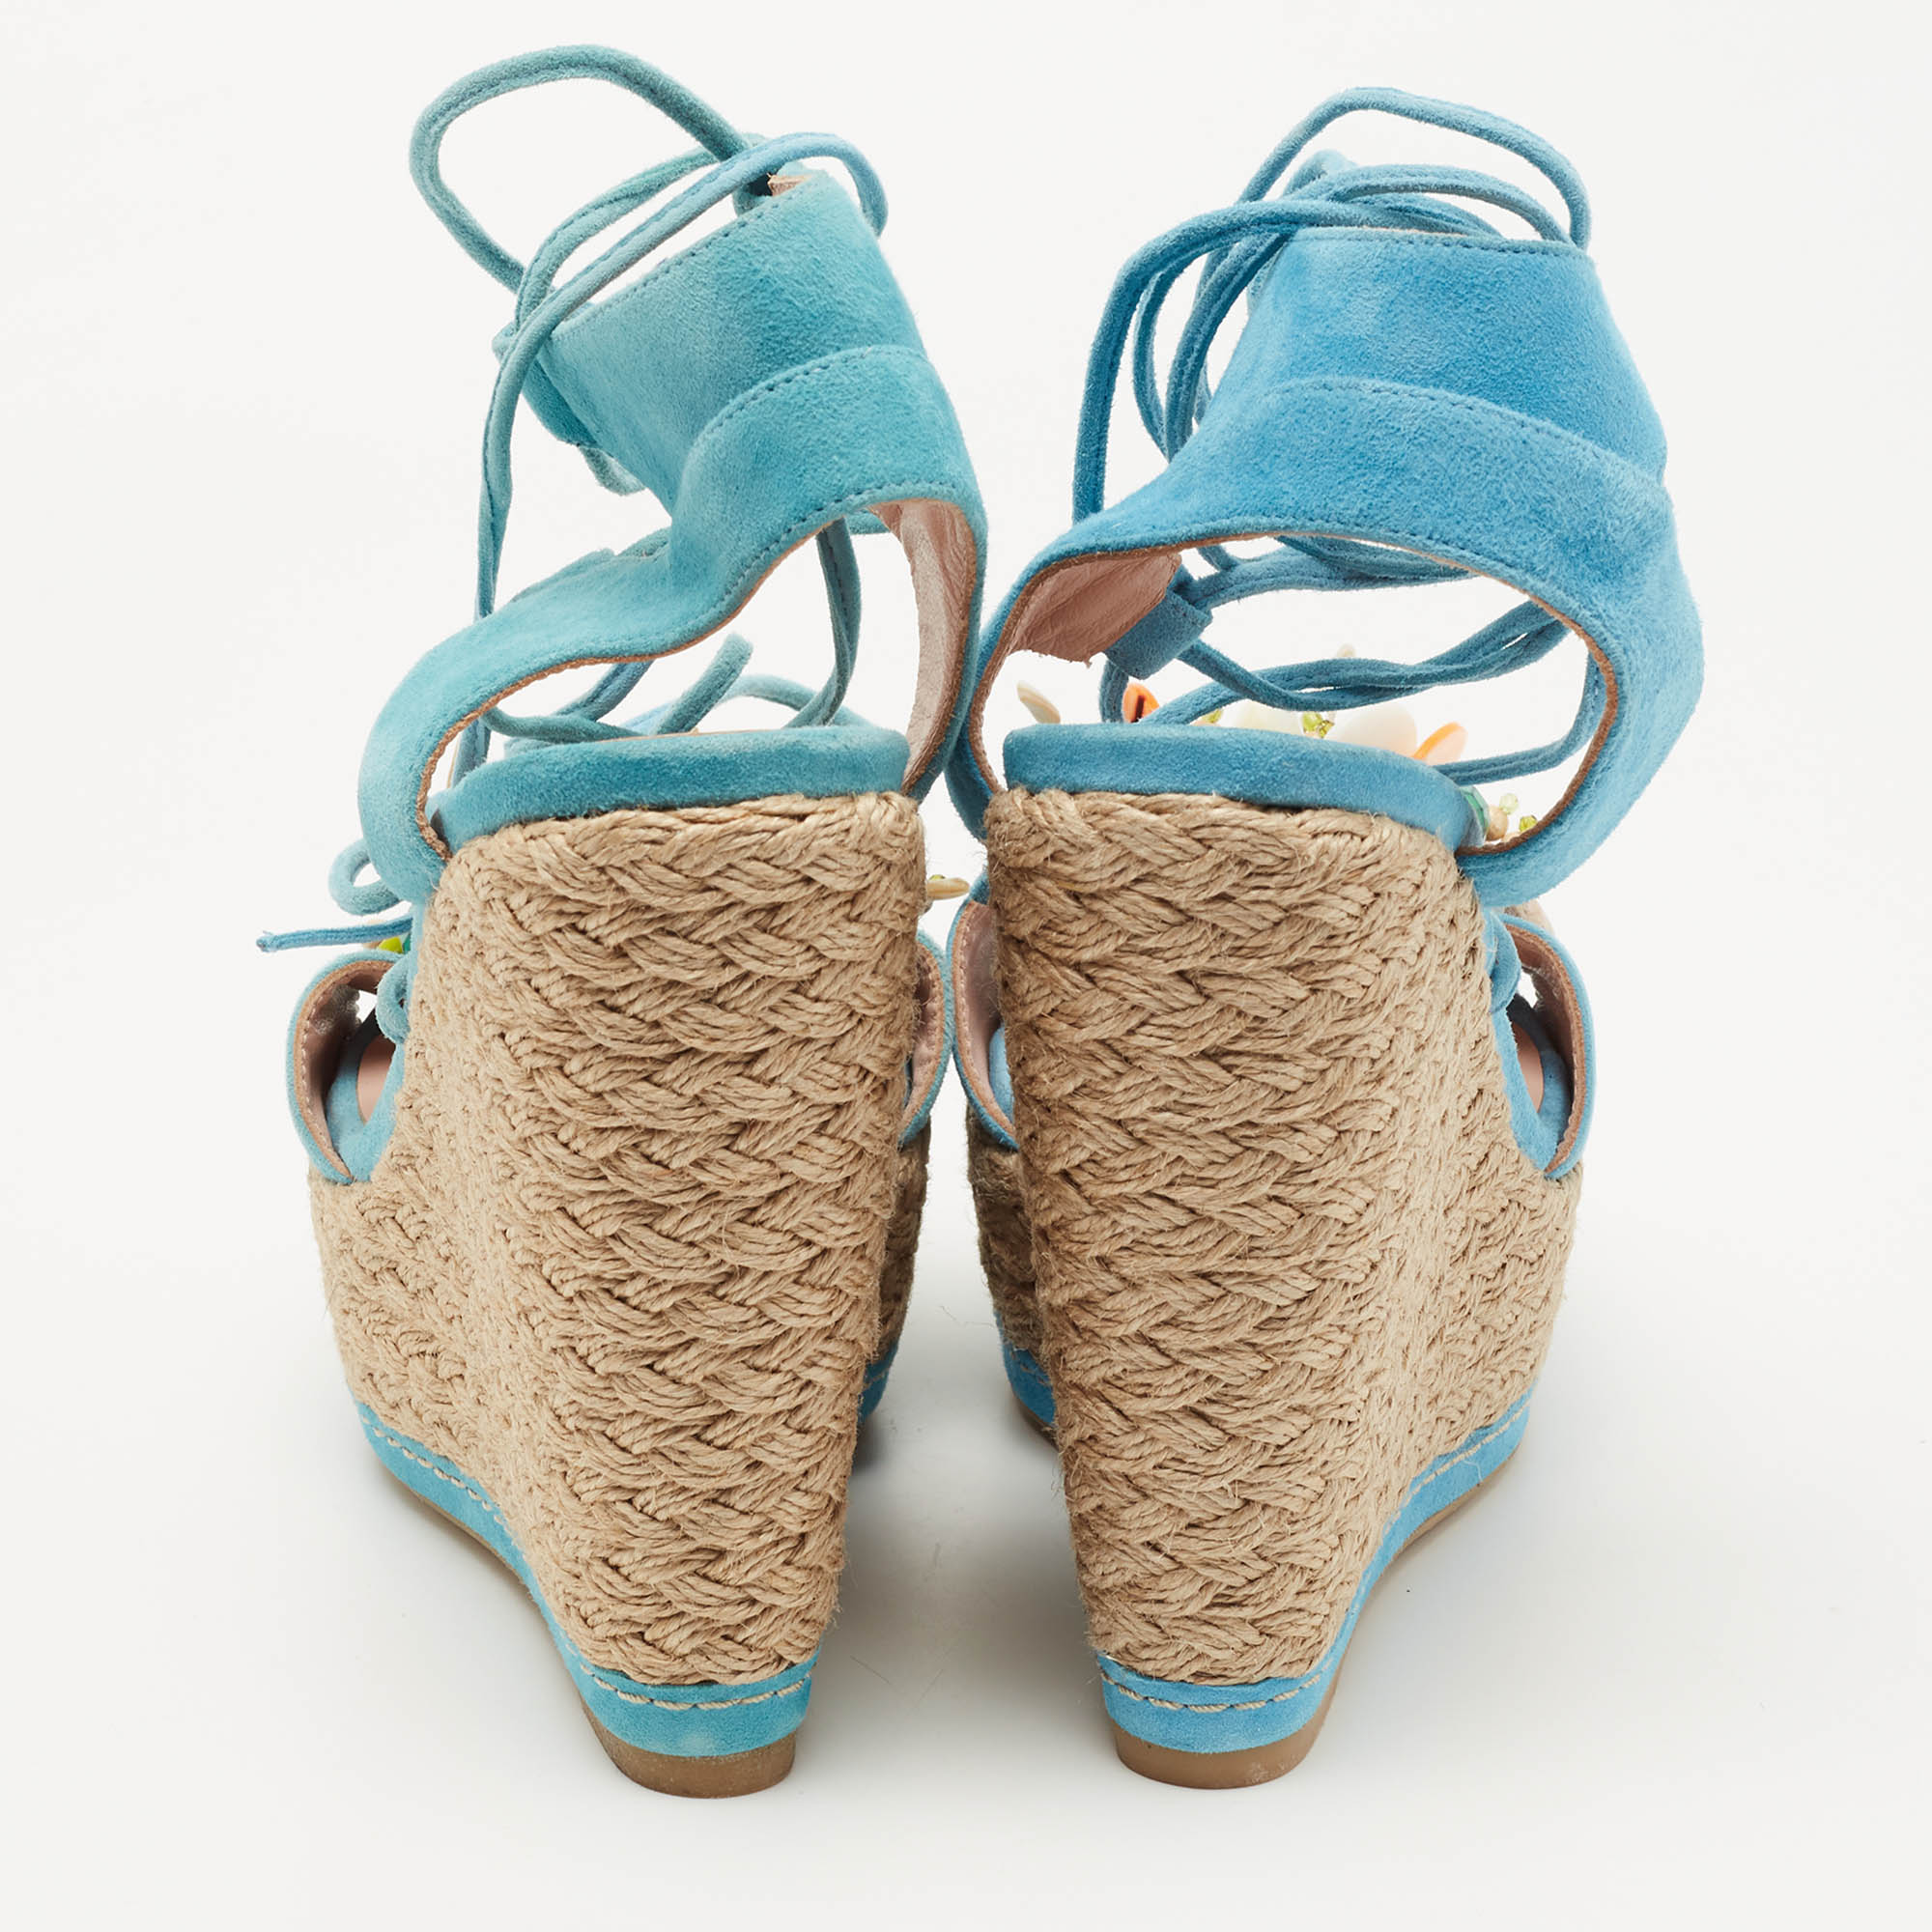 Stuart Weitzman Blue Suede Lace Up Wedge Sandals Size 36